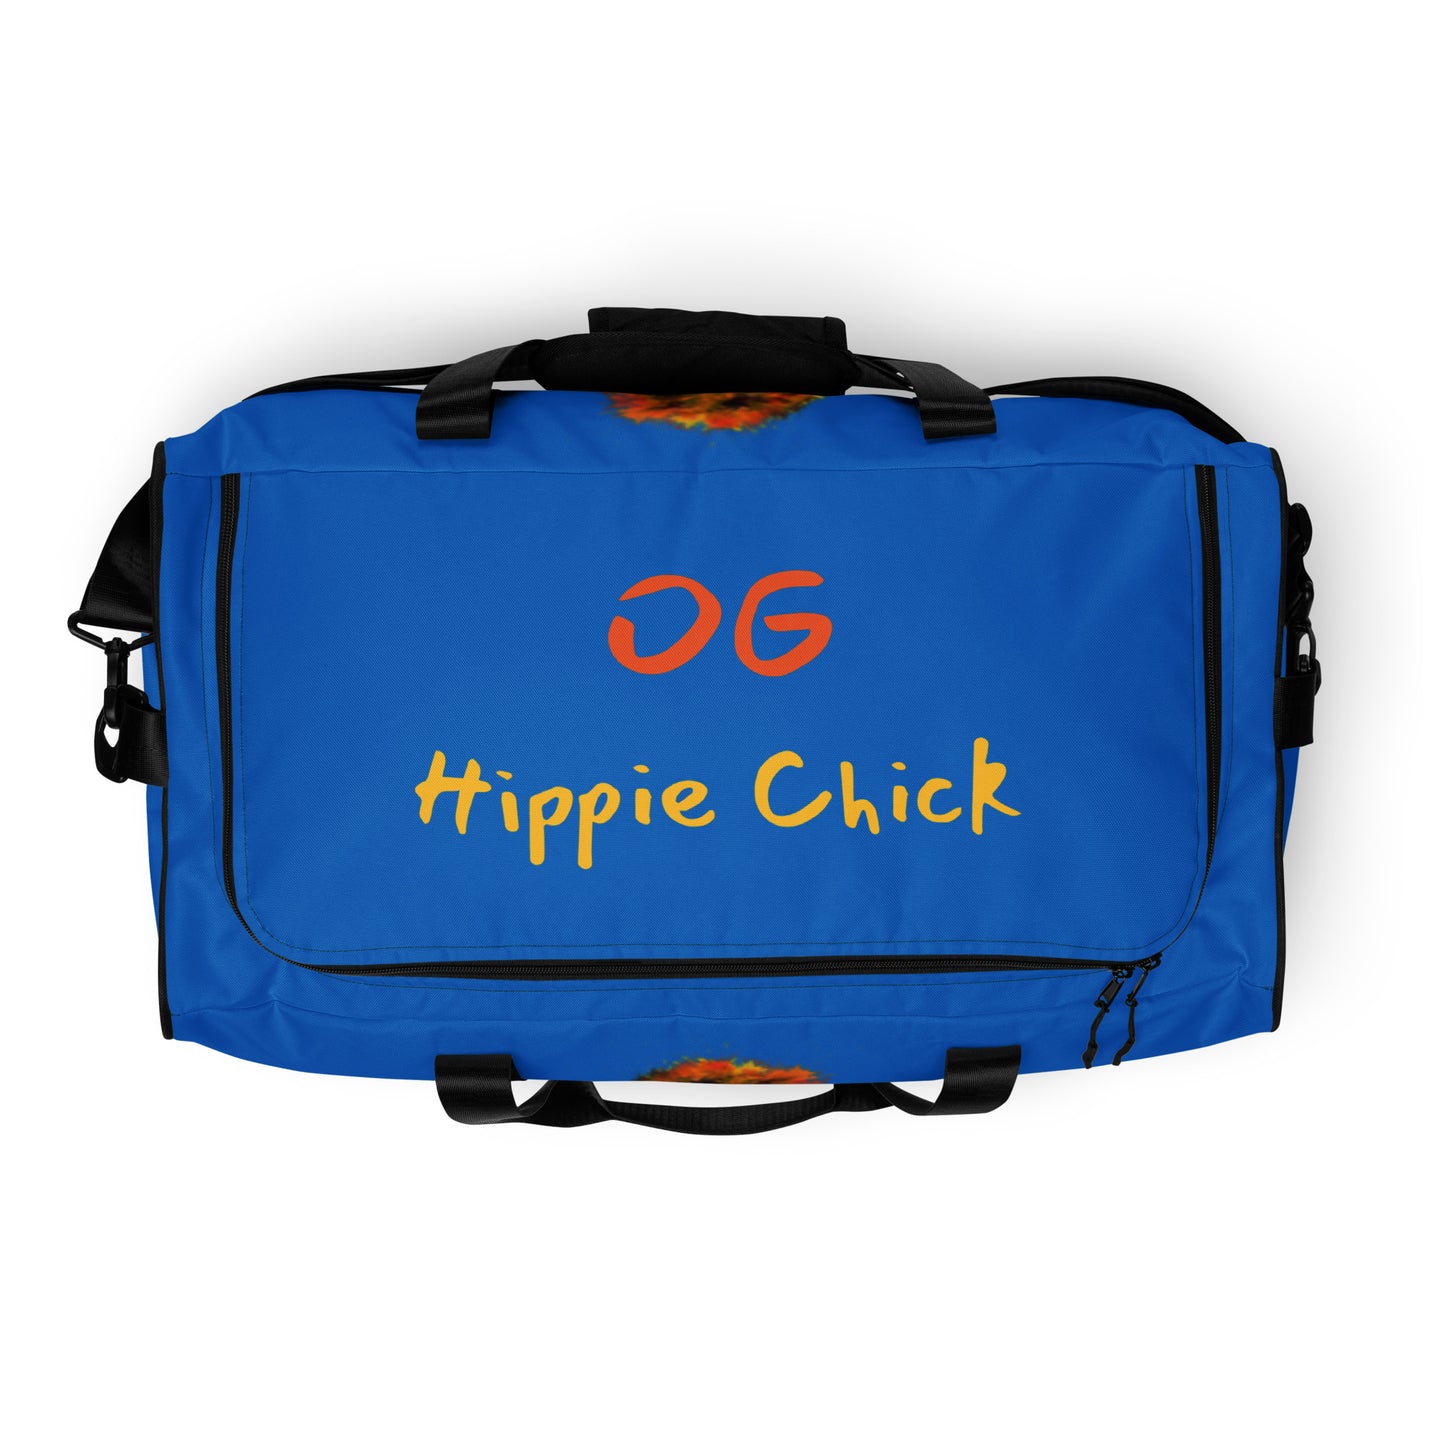 Blue Duffle Bag - OG Hippie Chick